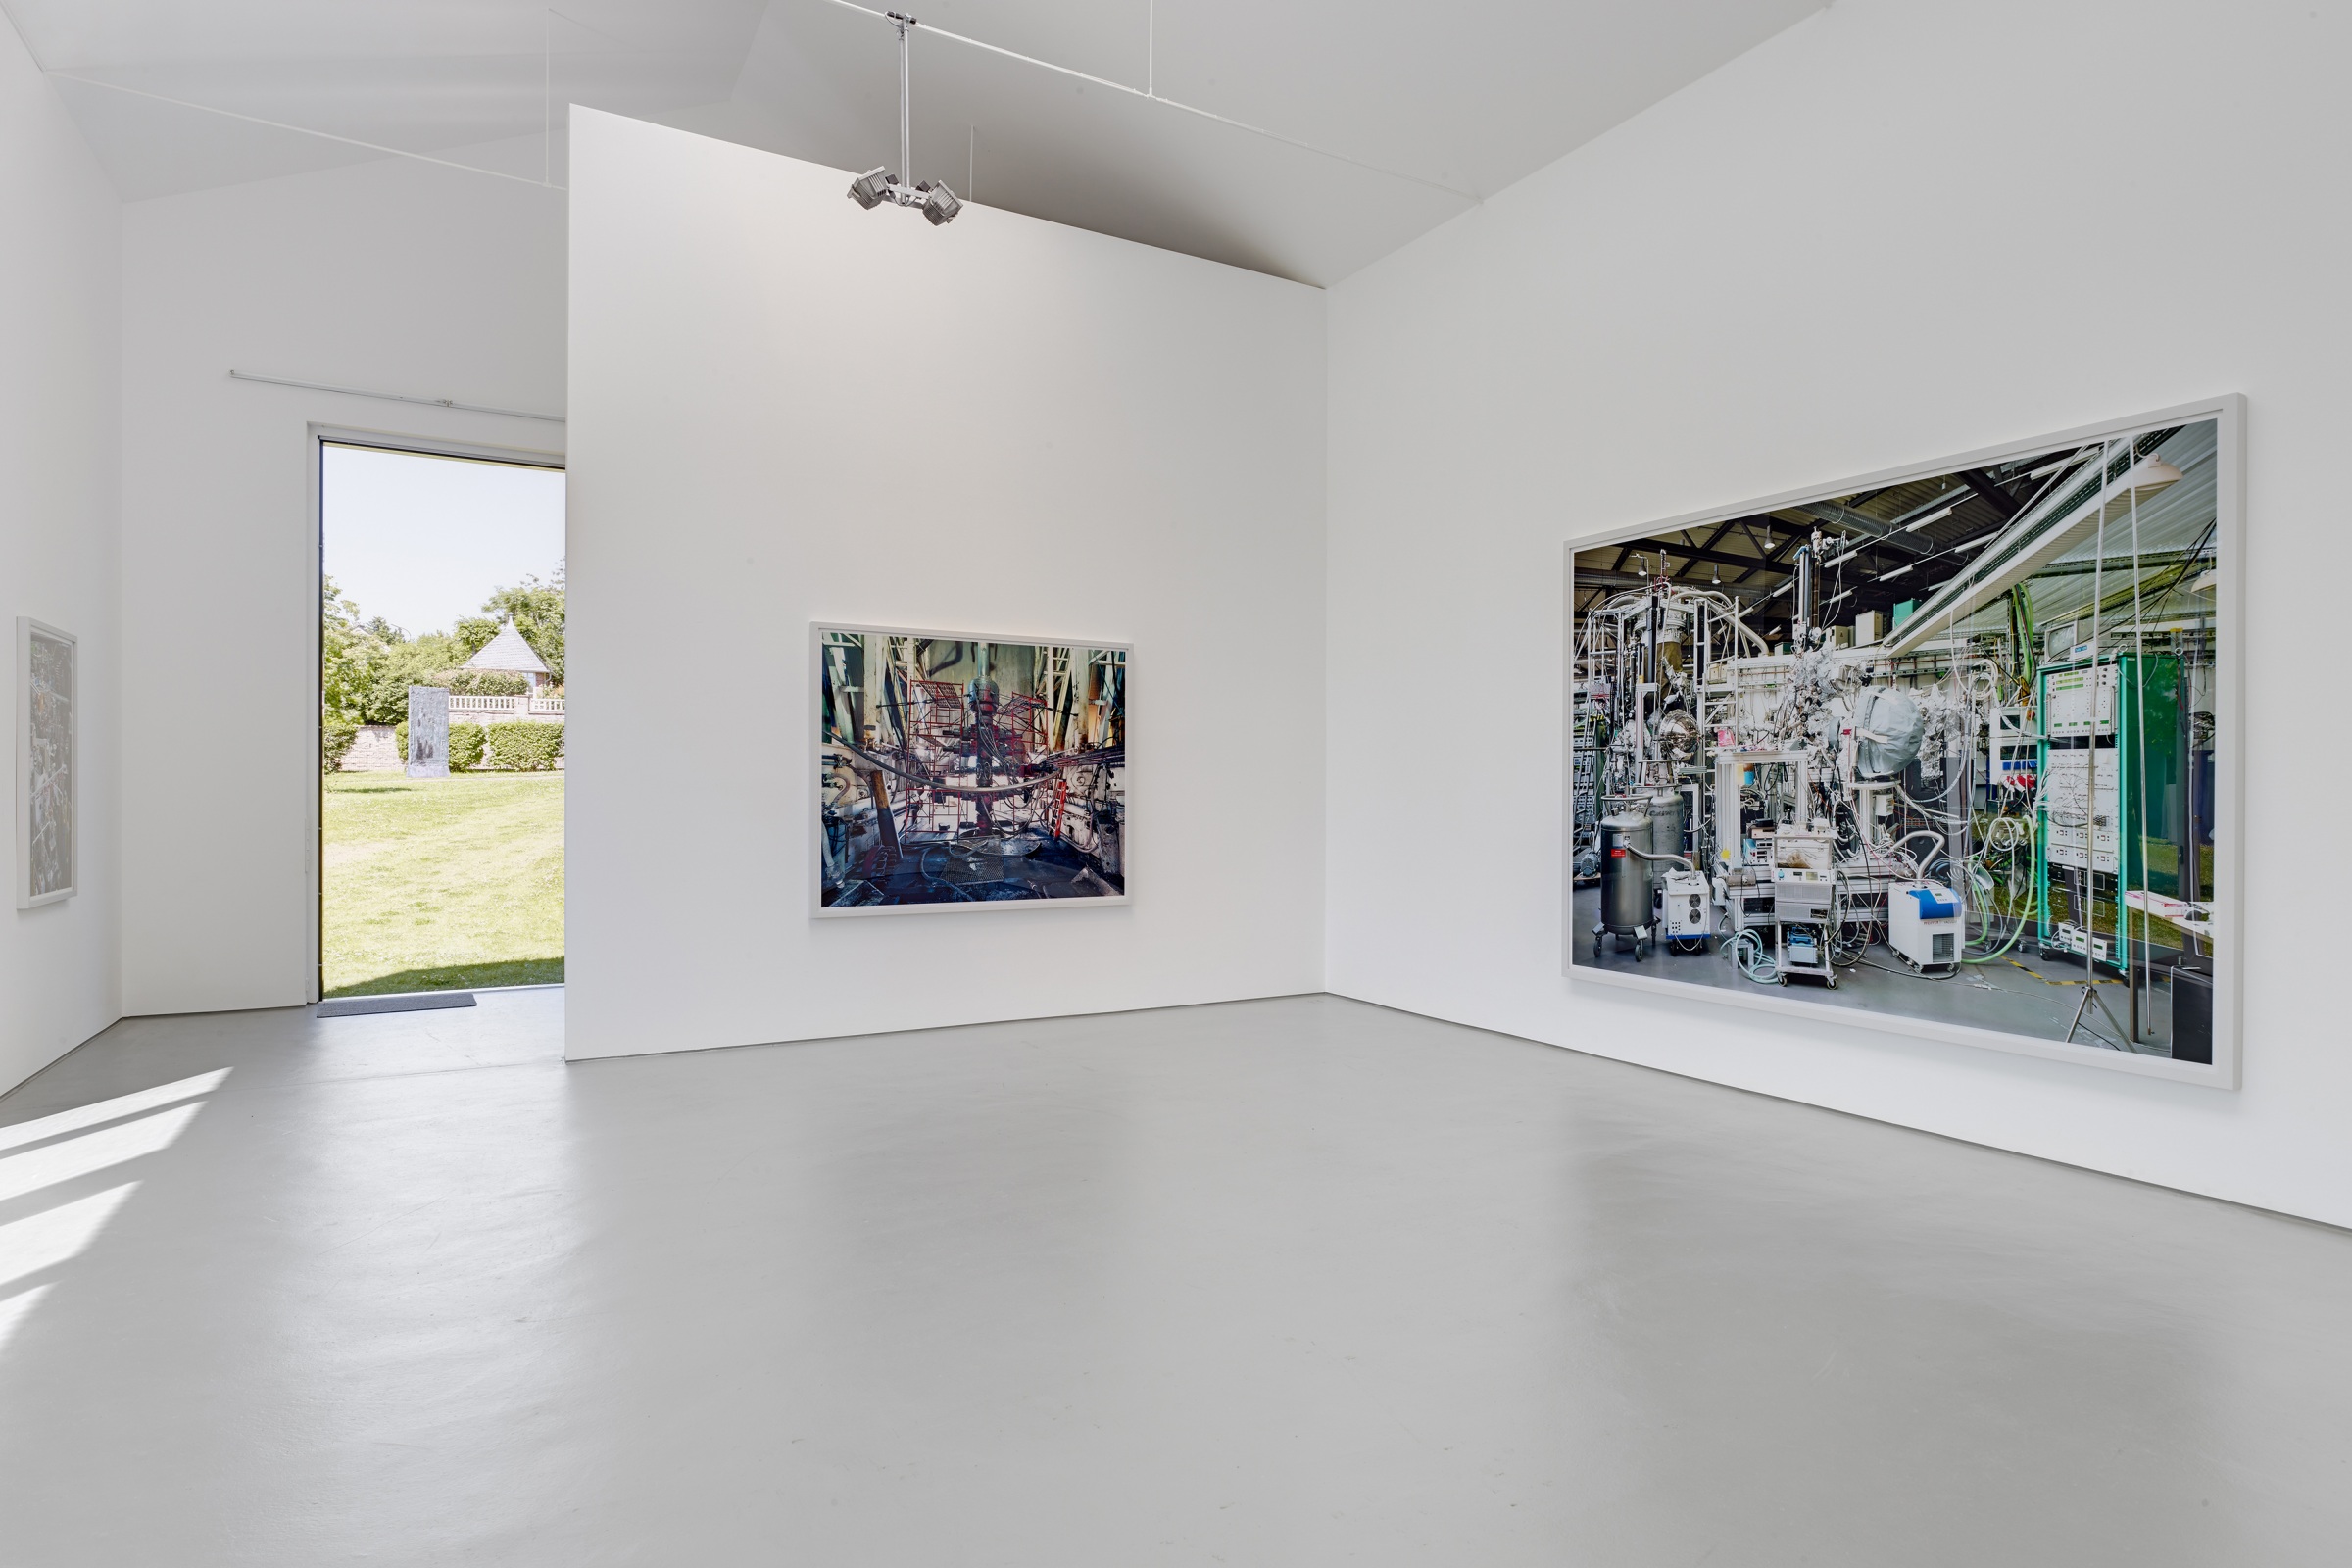 Thomas Struth, installation view, 2013